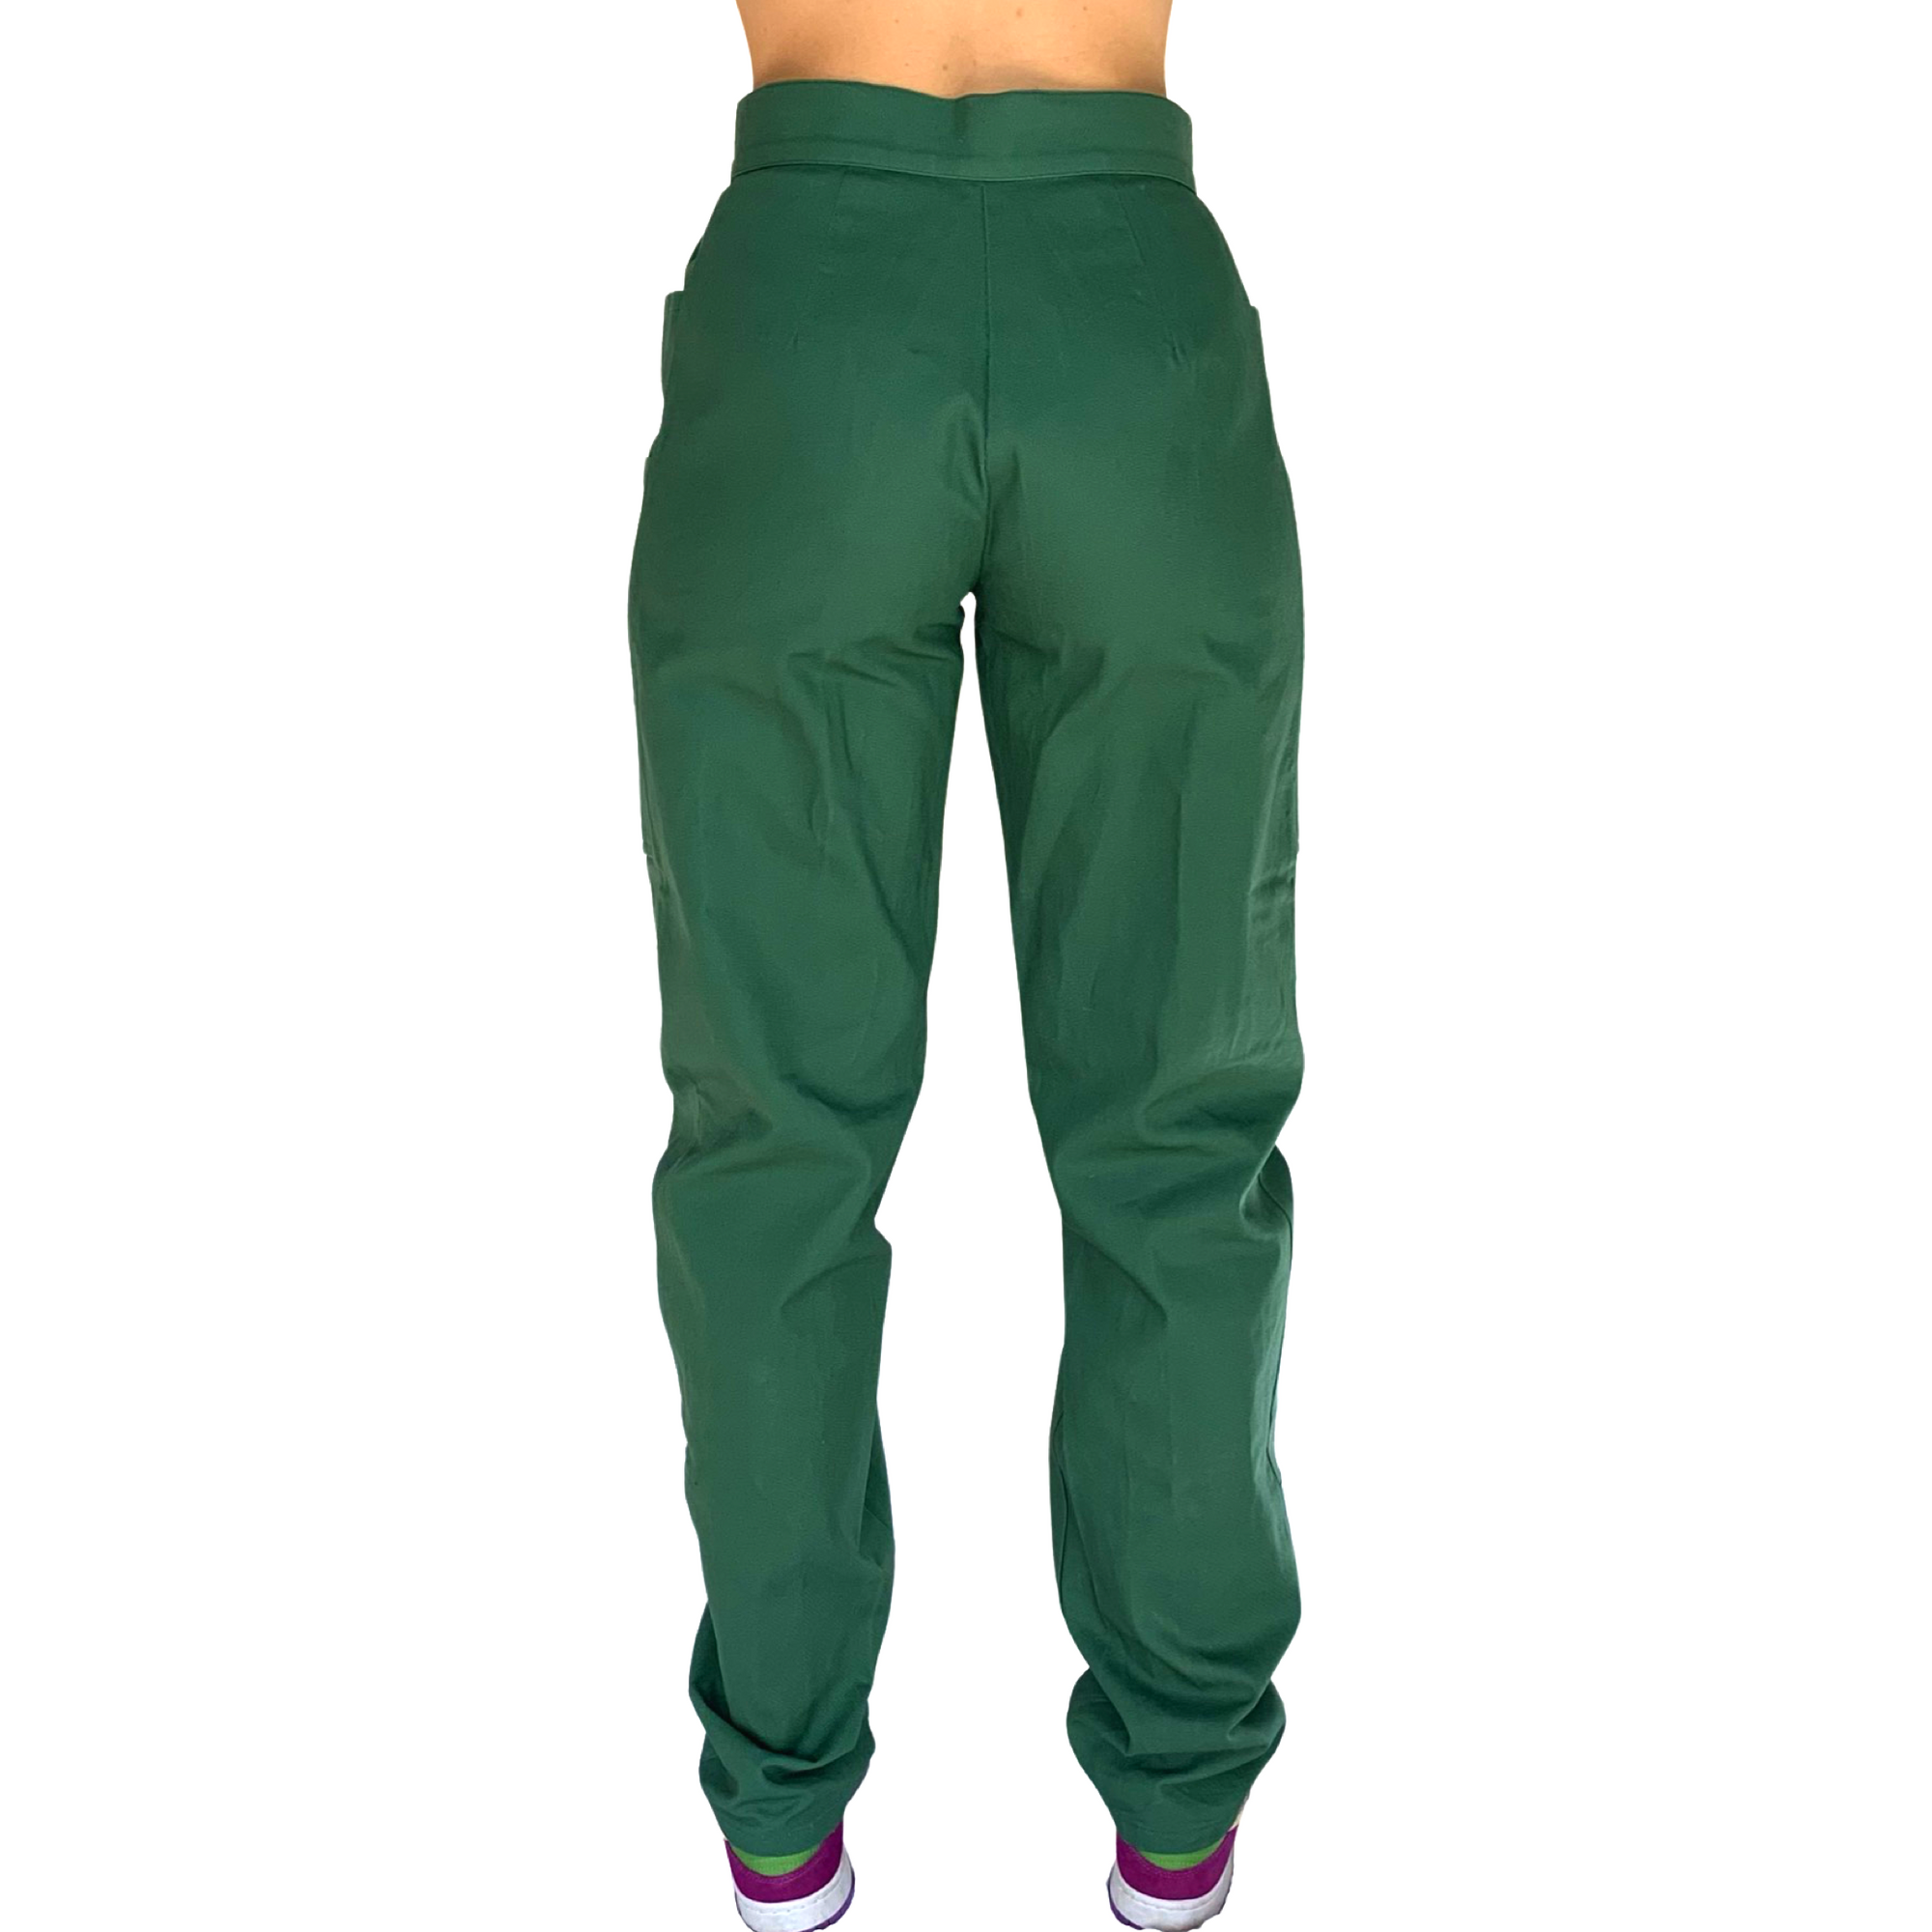 Women's Utility Pant in Green